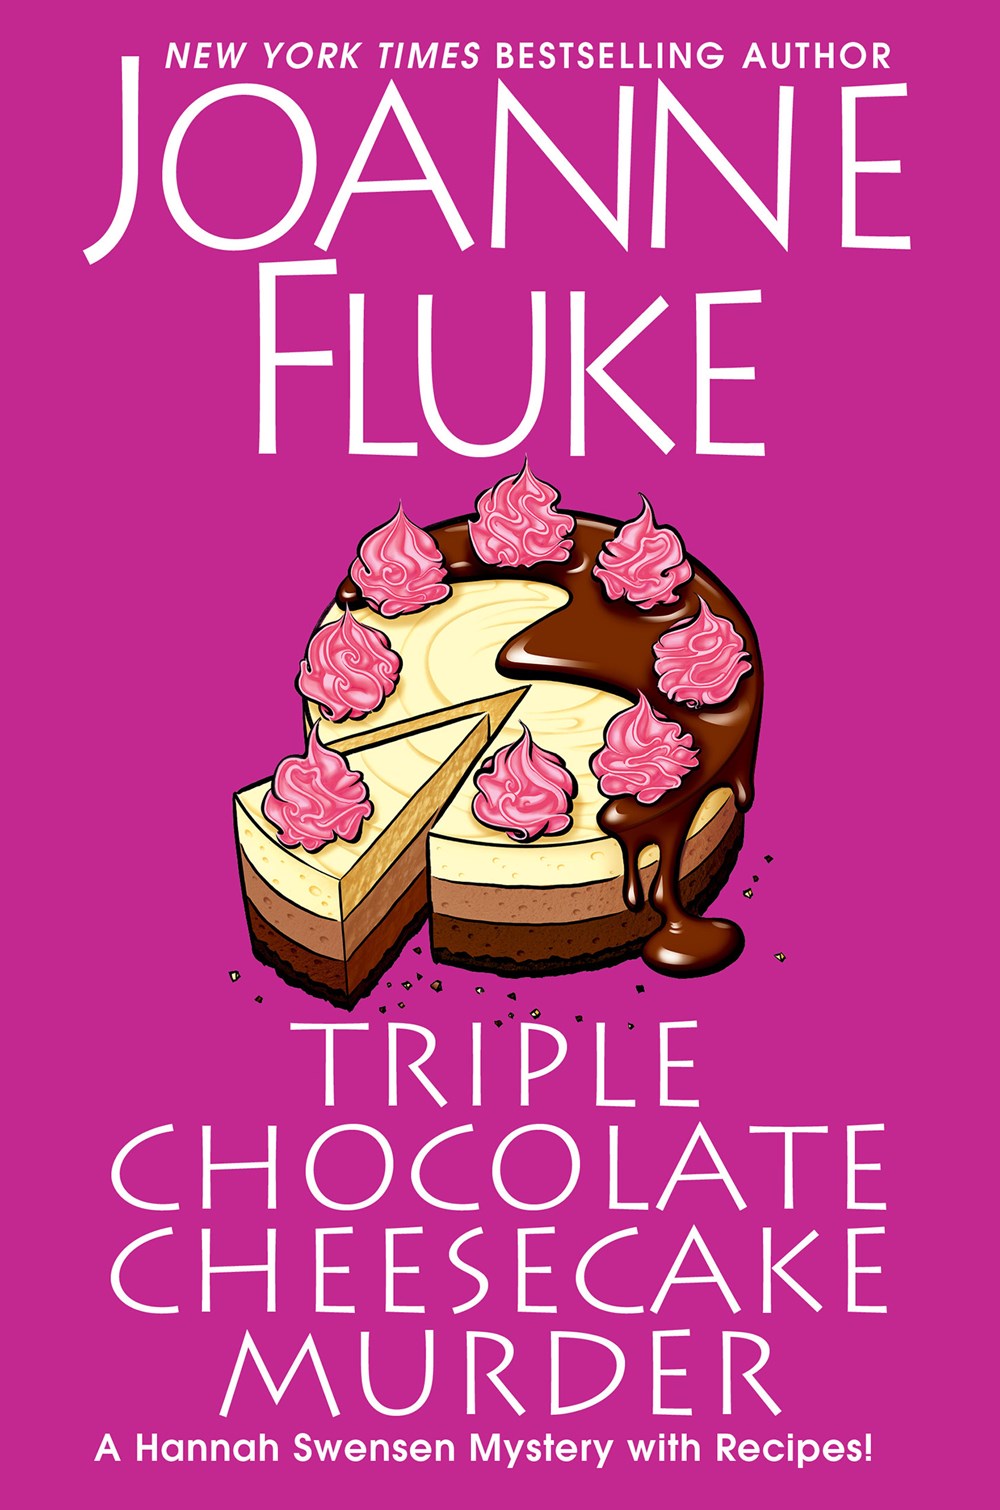 Read-Alikes for “Triple Chocolate Cheesecake Murder” by Joanne Fluke | LibraryReads